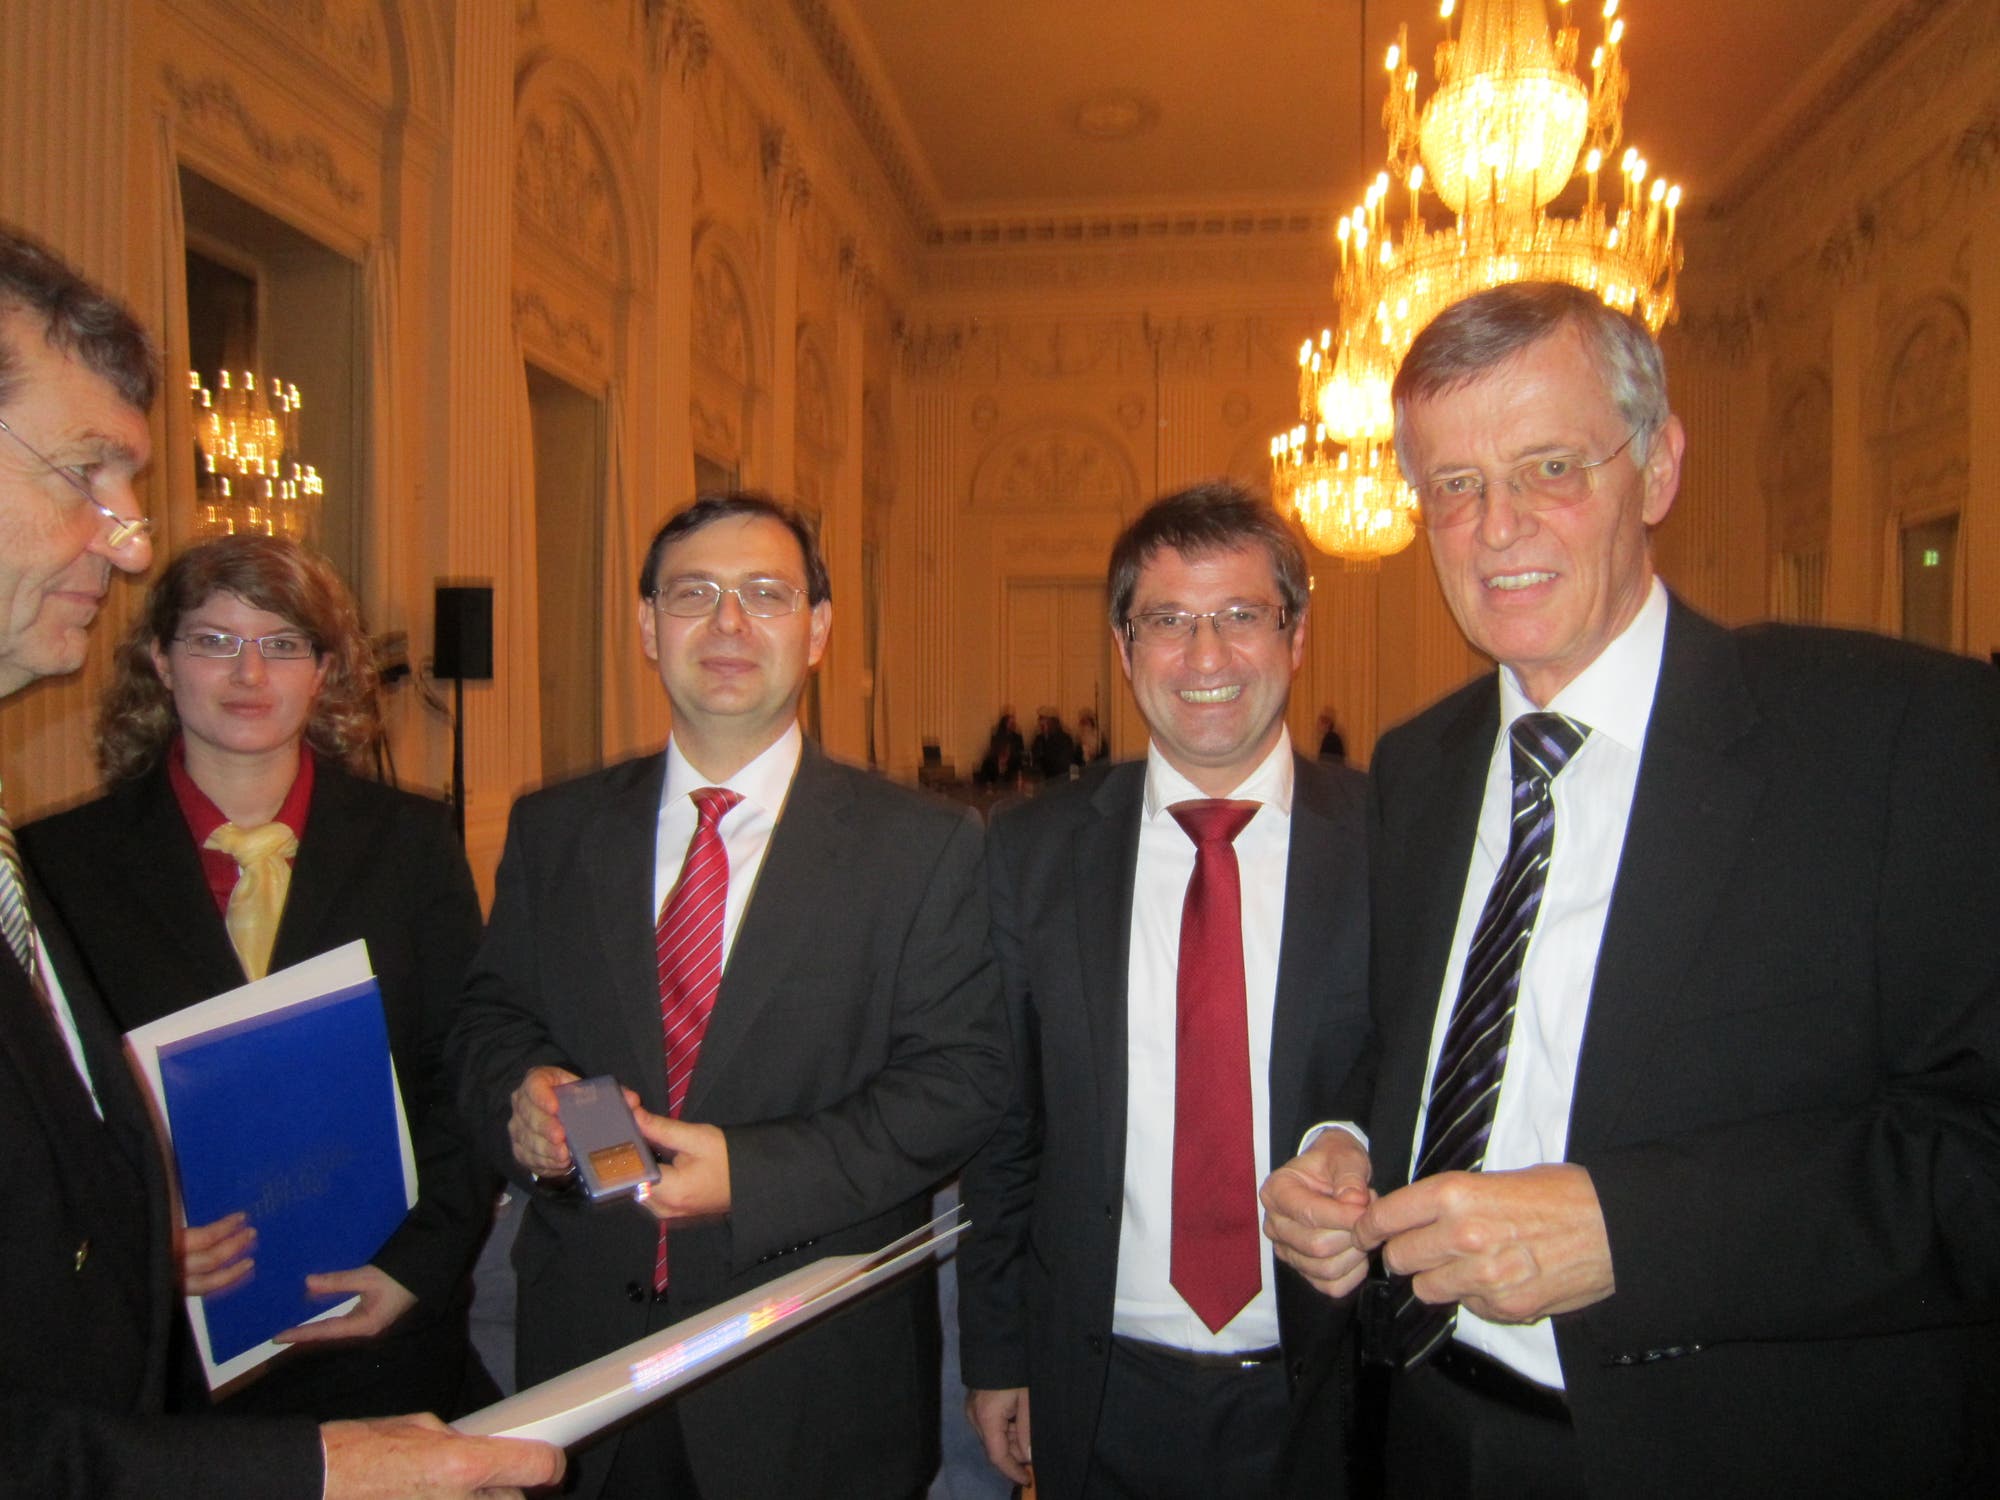 Désirée Queren, Adrian Avramescu und Stephan Lutgen gemeinsam mit Reinhard Breuer